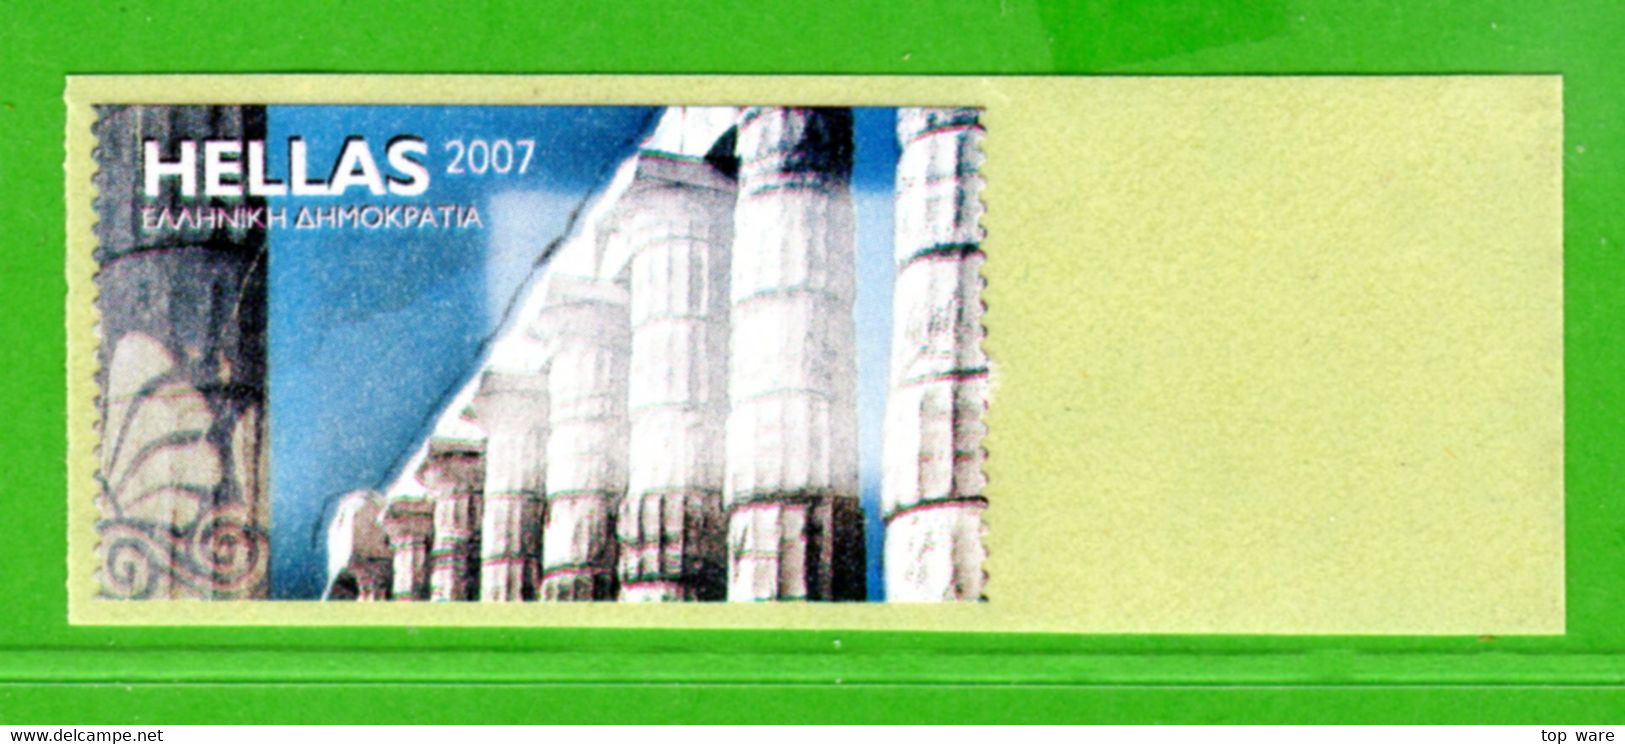 Greece Griechenland HELLAS ATM 23 Temple Colums * Blank Label * Frama Etiquetas Automatenmarken Primtec HERMES - Automatenmarken [ATM]